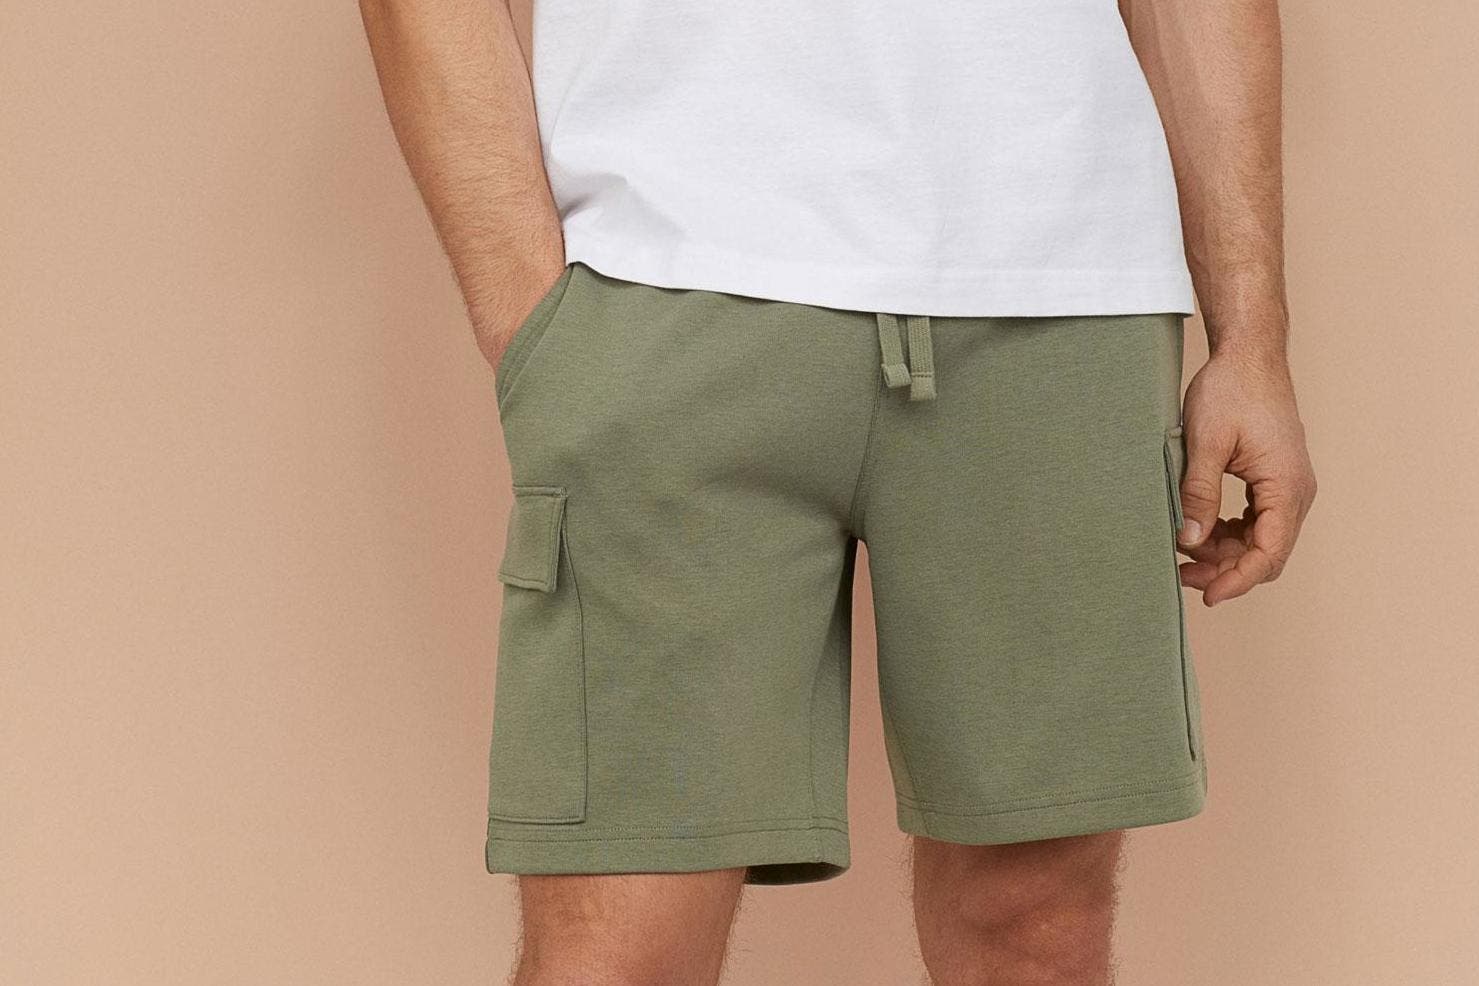 Mens' shorts for big thighs 2